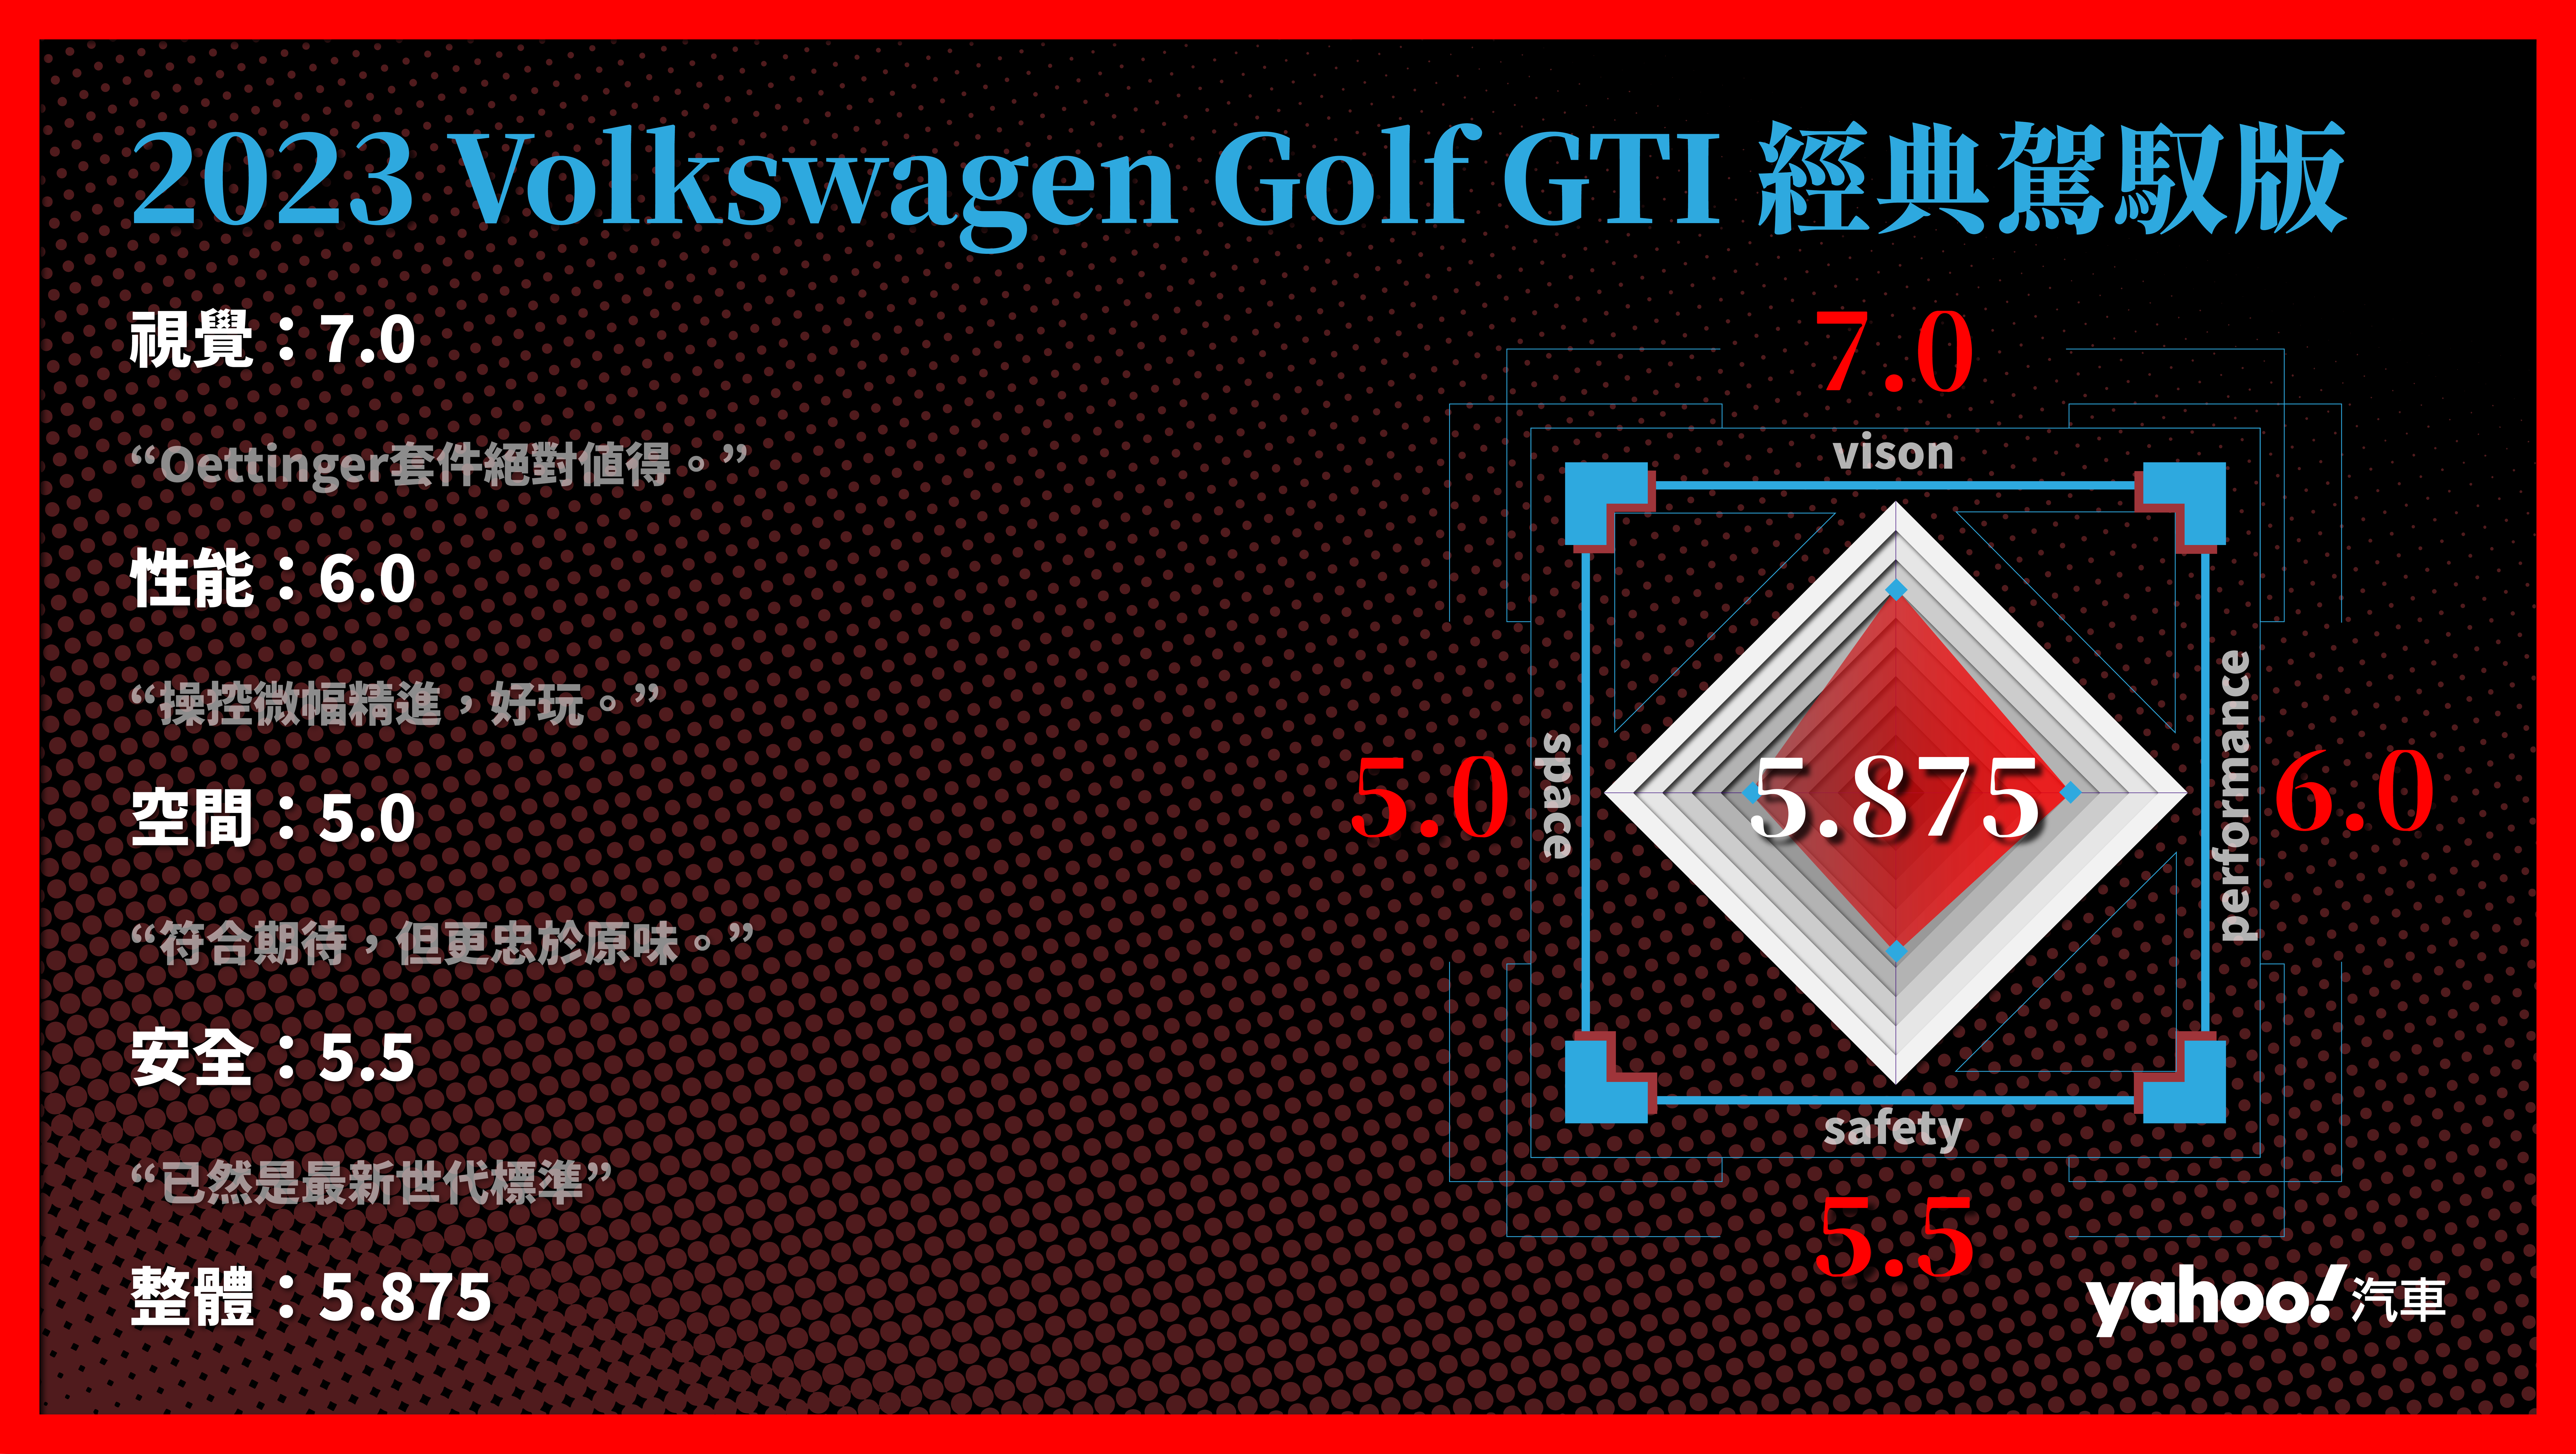 2023 Volkswagen Golf GTI經典駕馭版 分項評比。